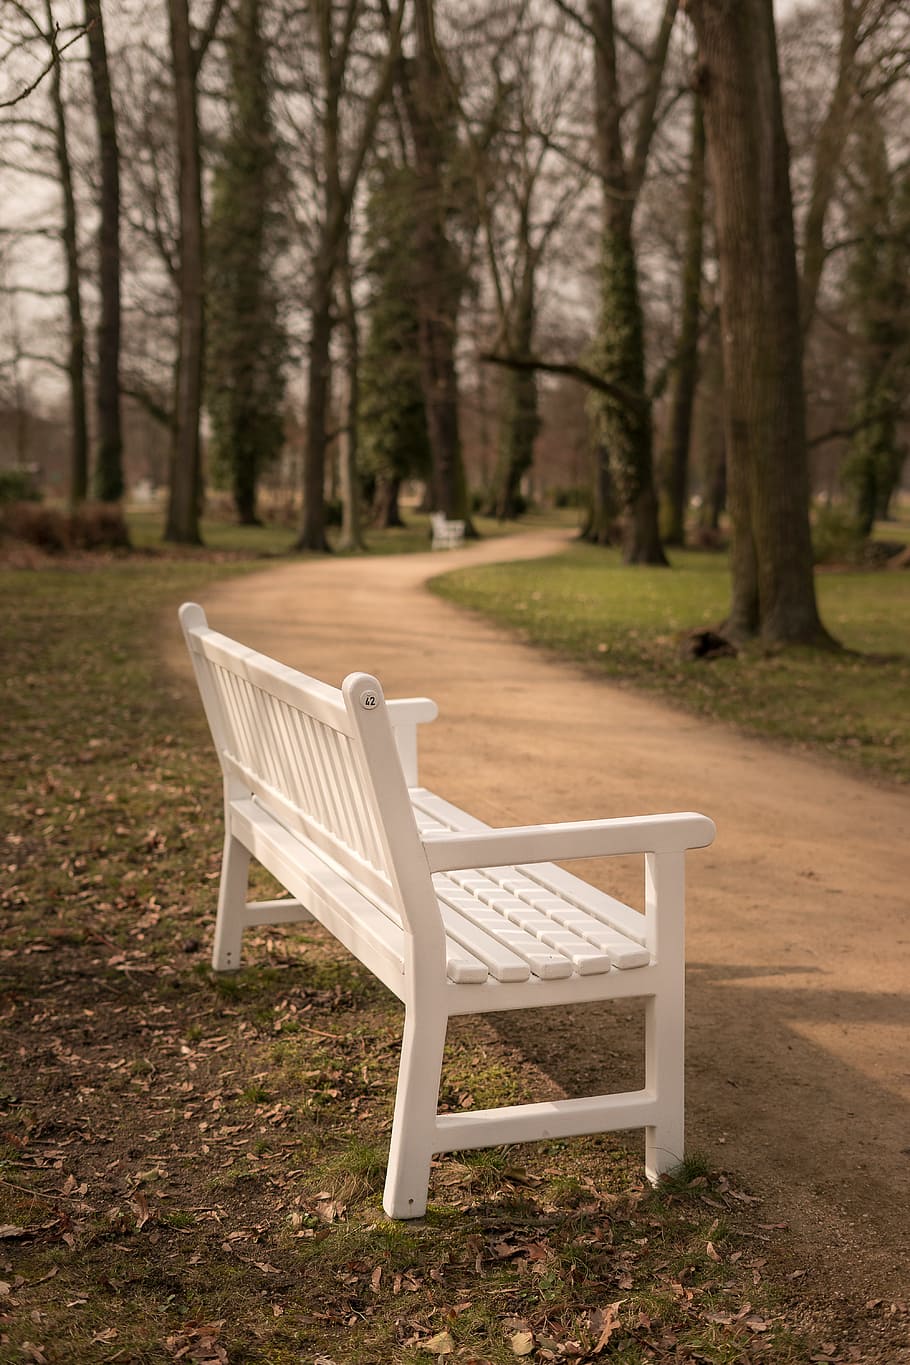 white, wooden, bench, dirt path, Bank, Rest, Relax, Reflect, Away, Silent